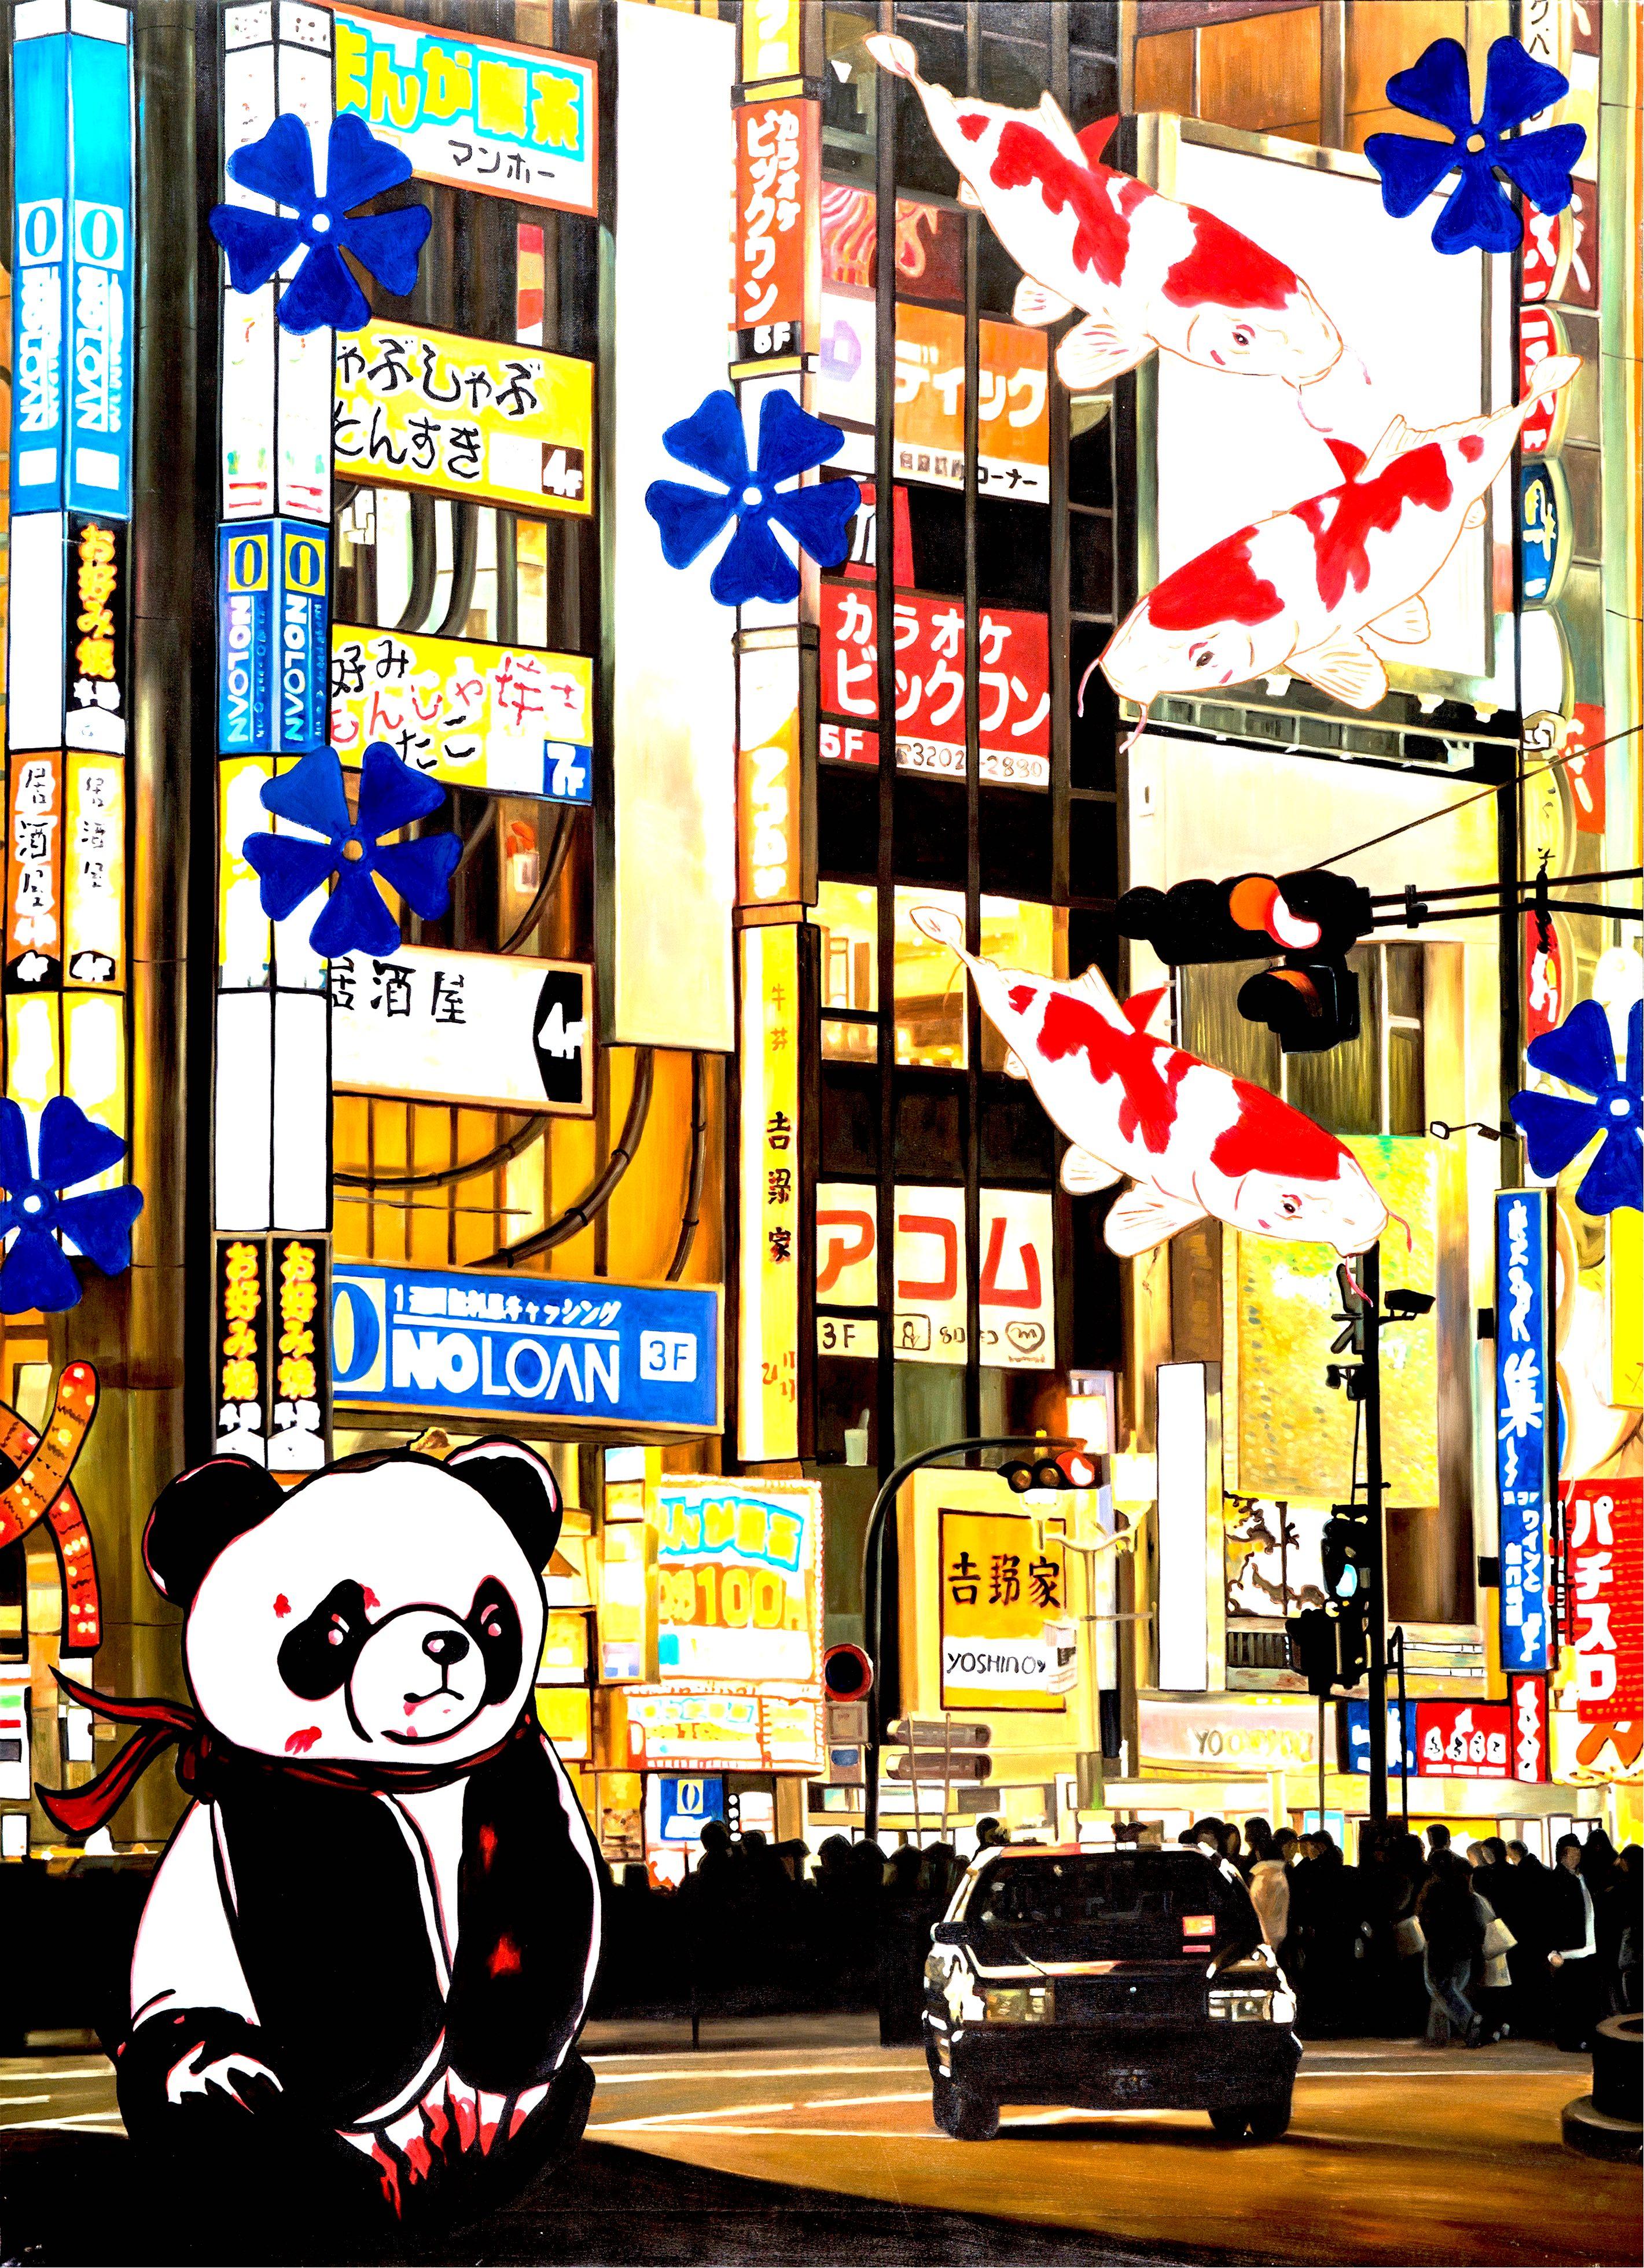 No Loan Twilight: Pandasan's Luminescent Reverie – Painting von HIRO ANDO